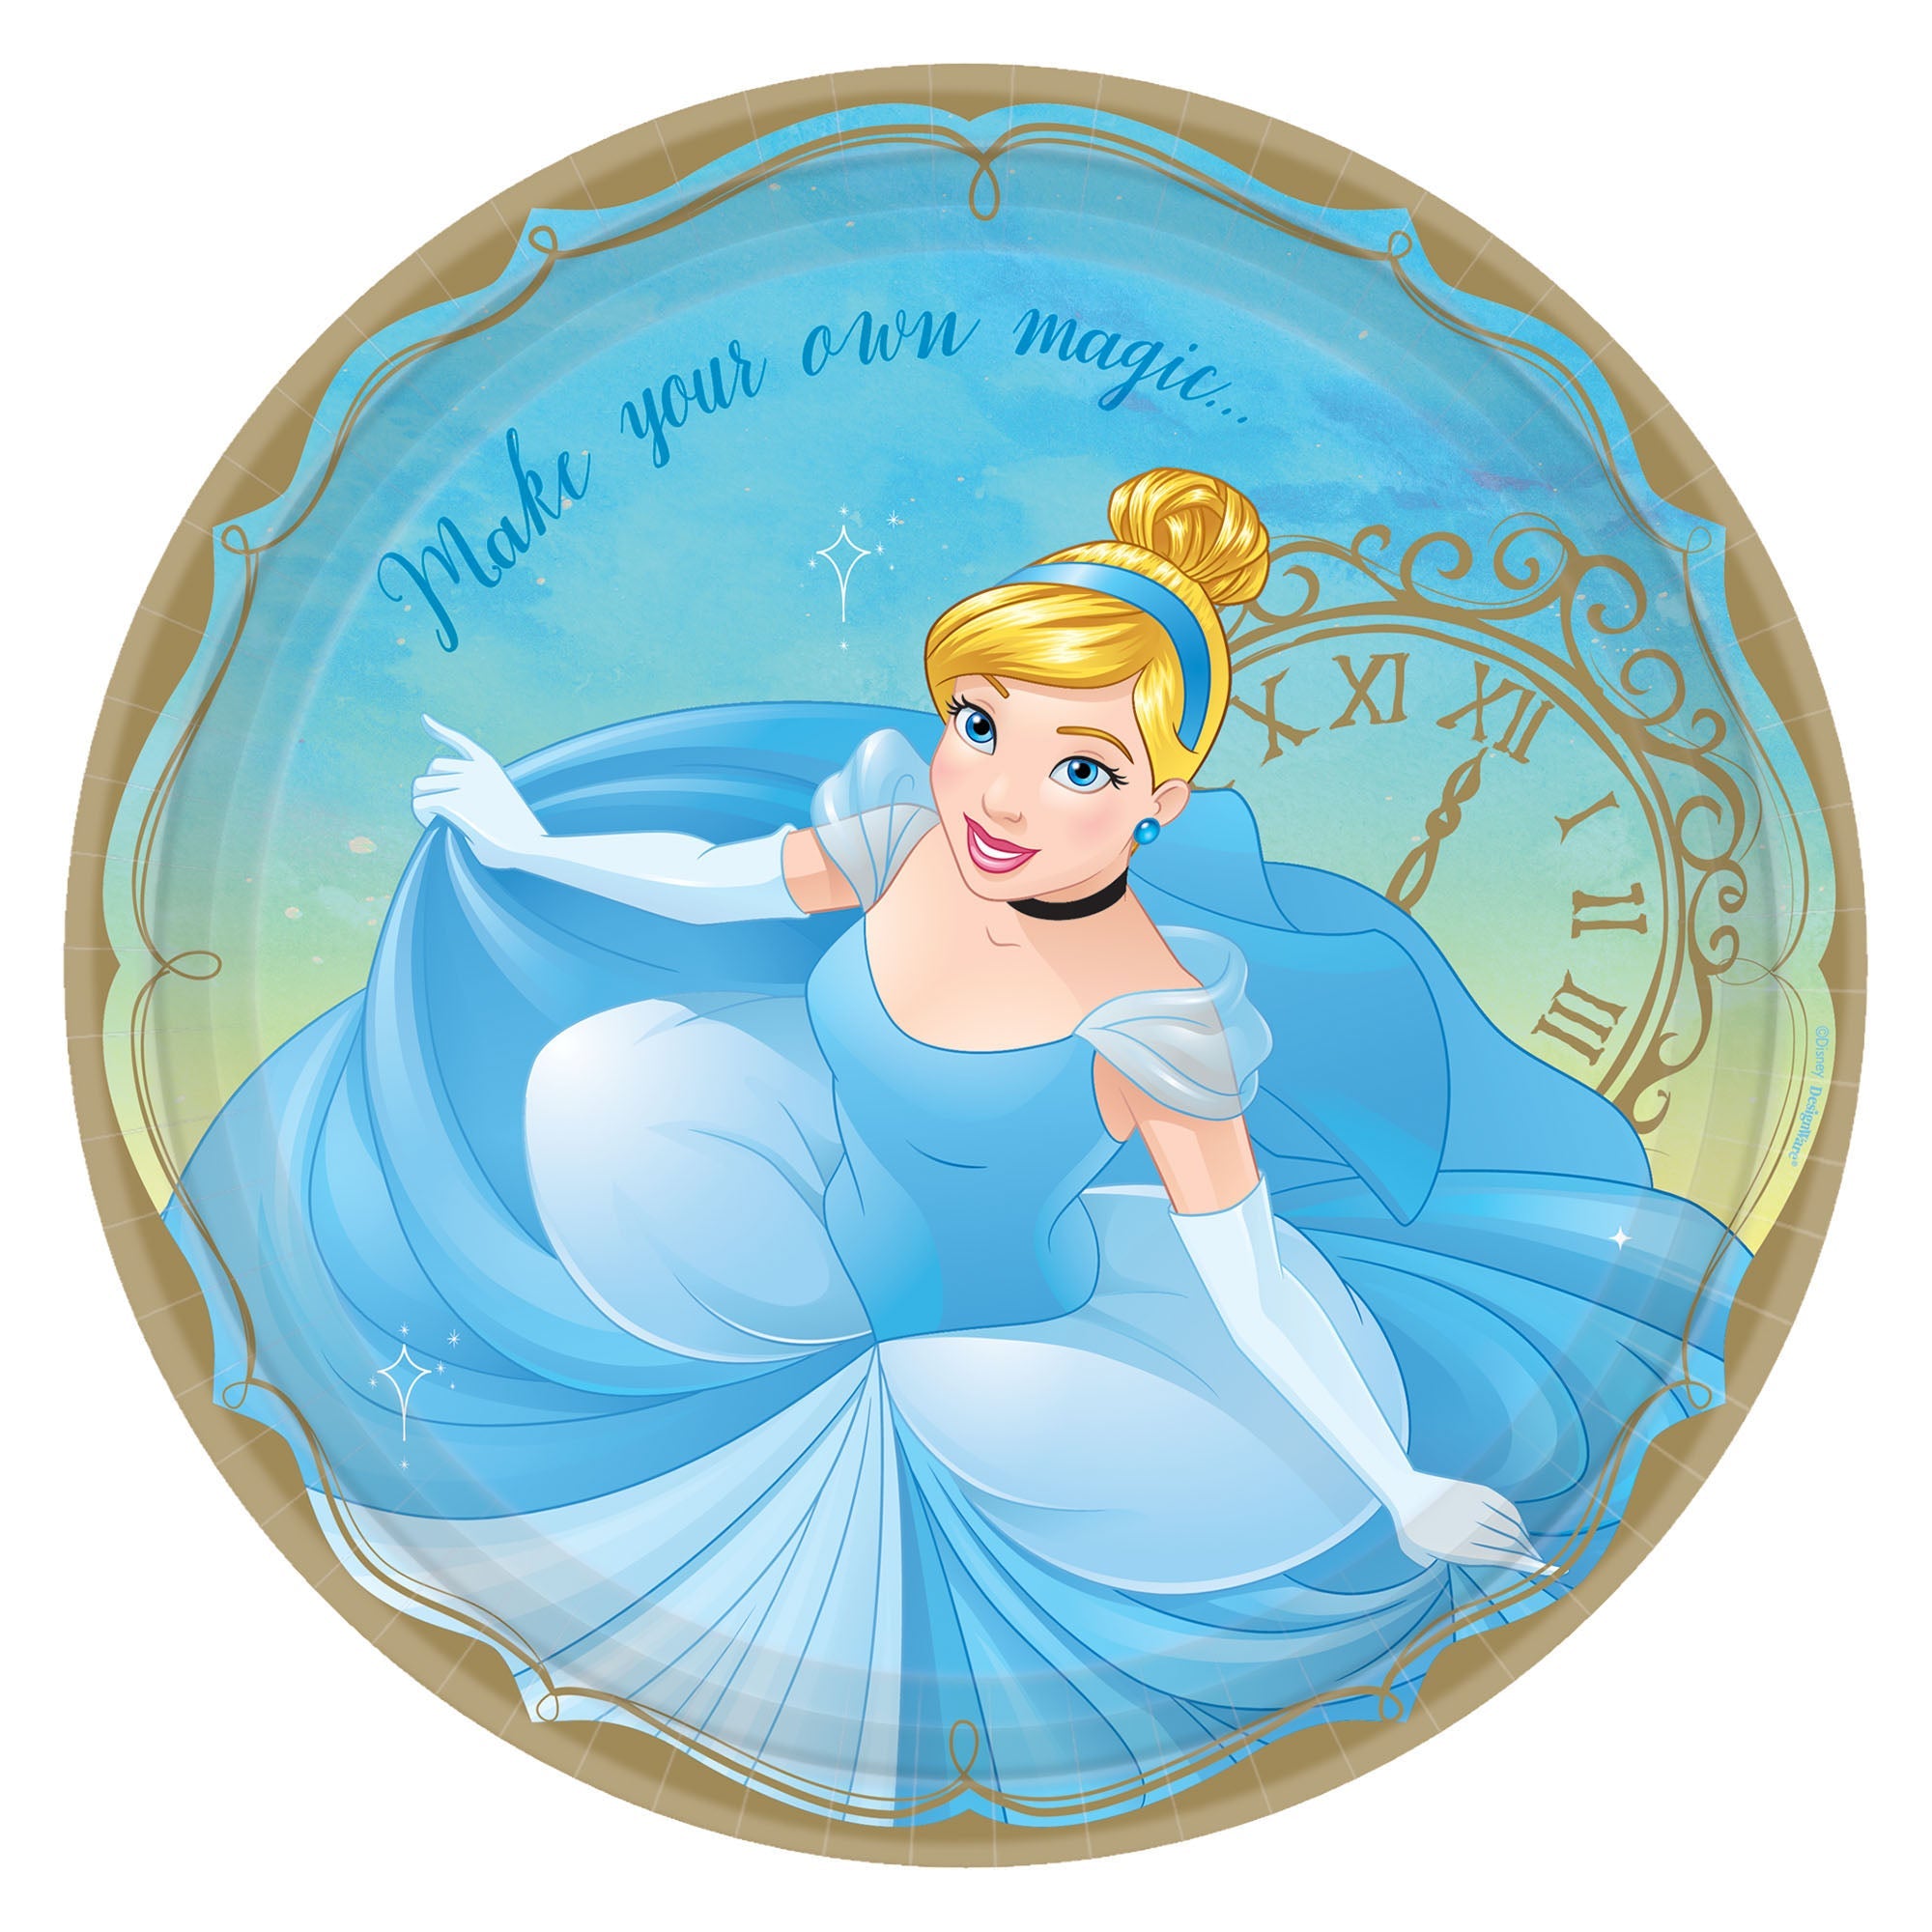 Disney Princess Cinderella 9" Round Plates Package of 8